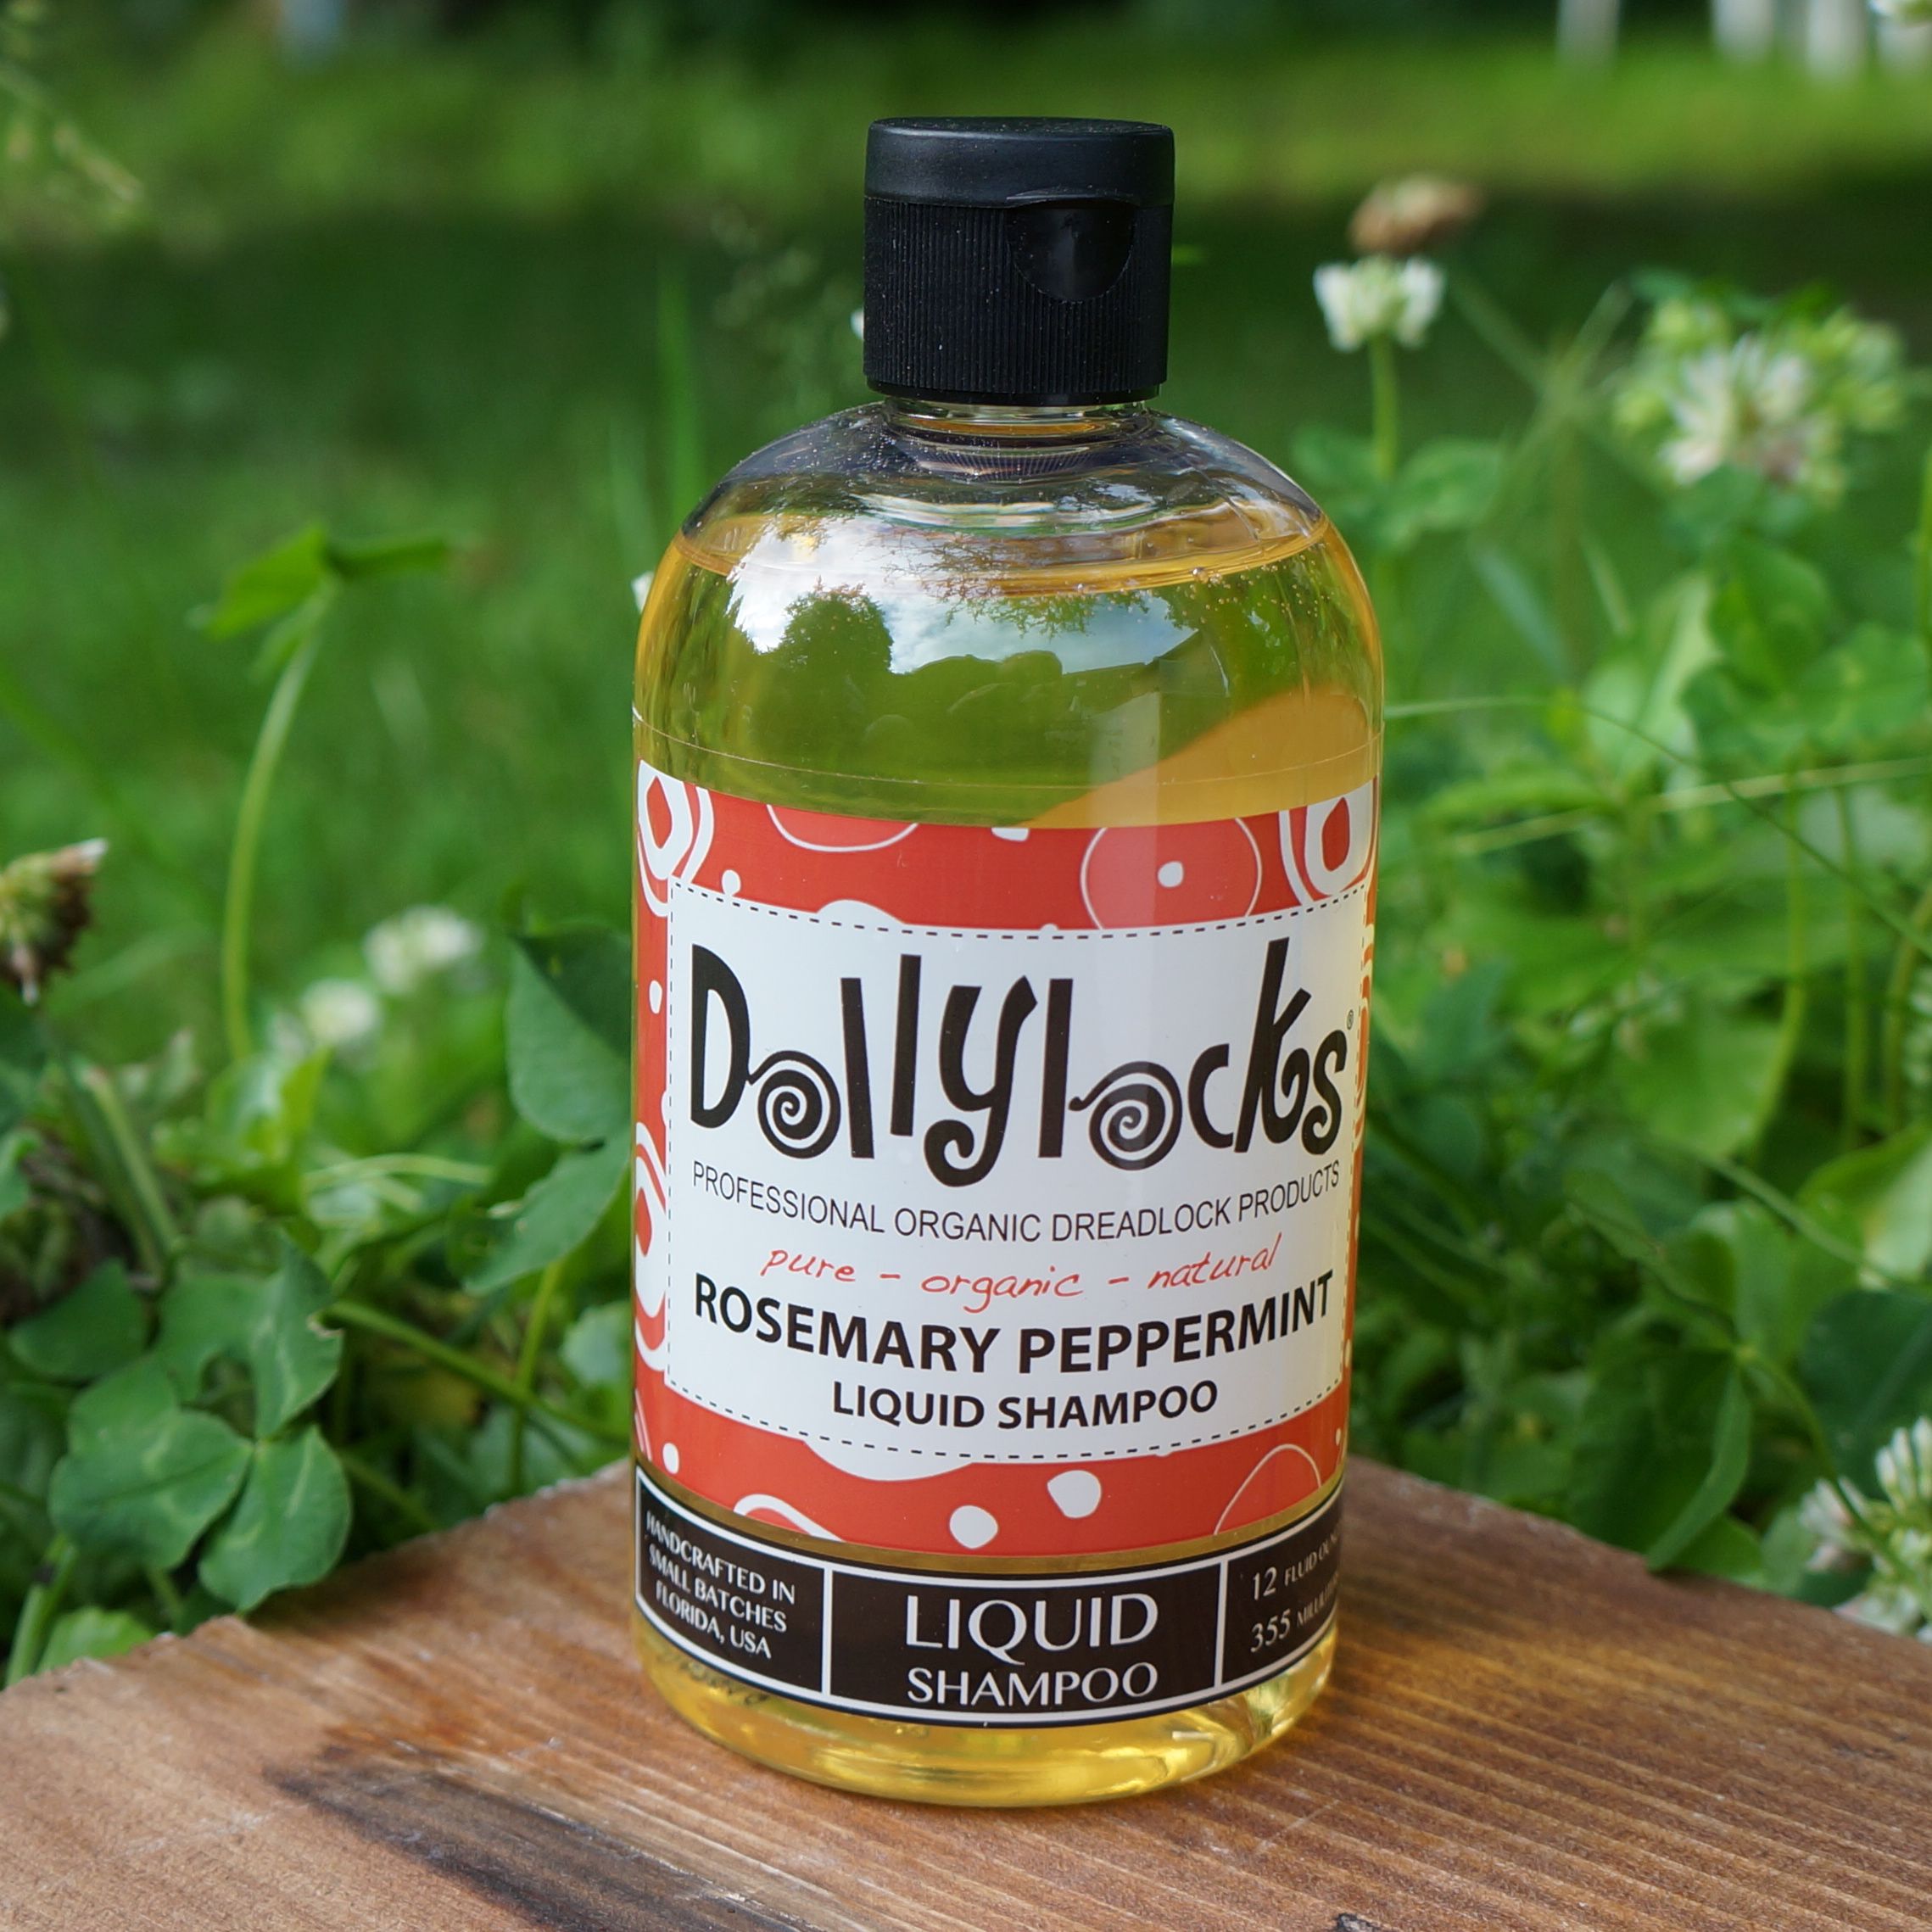 DollyLocks Liquid Dreadlock Shampoo - Buy Your Dreadlock